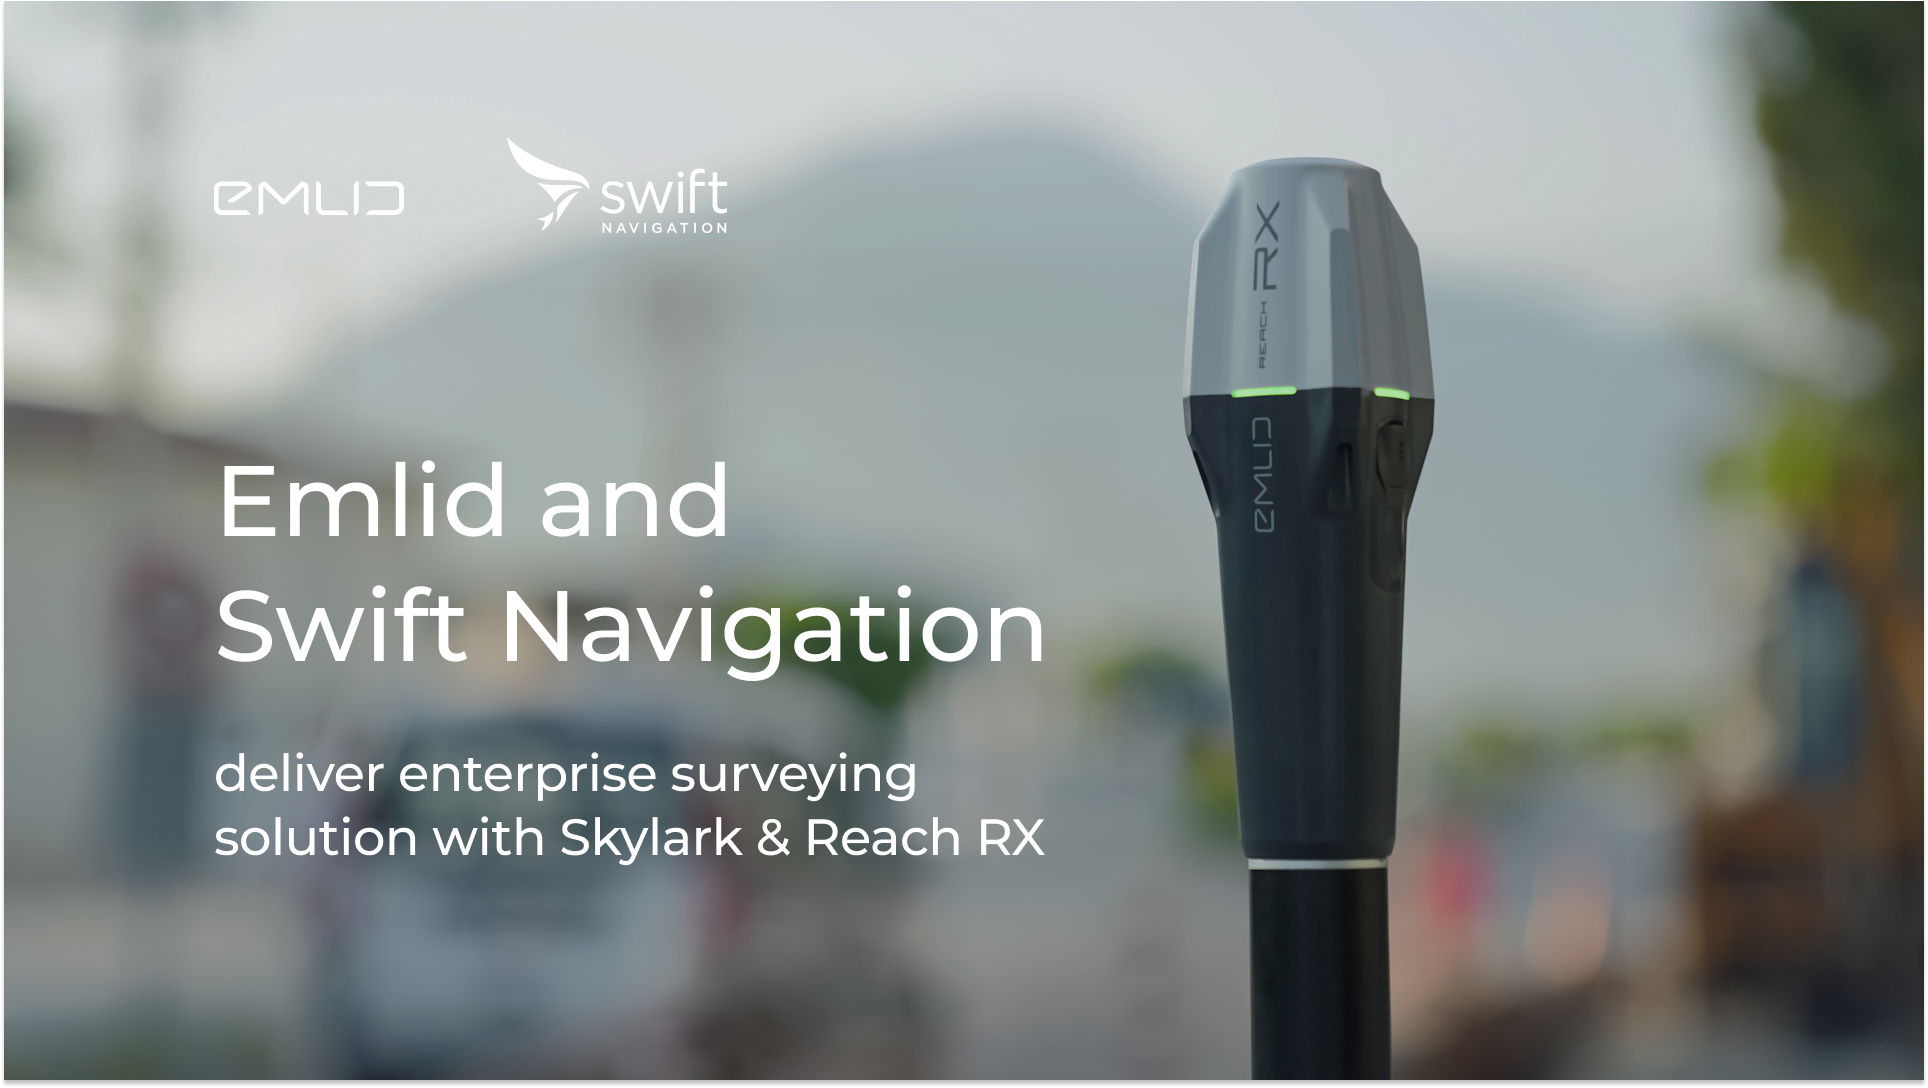 Emlid and Swift Navigation partnership